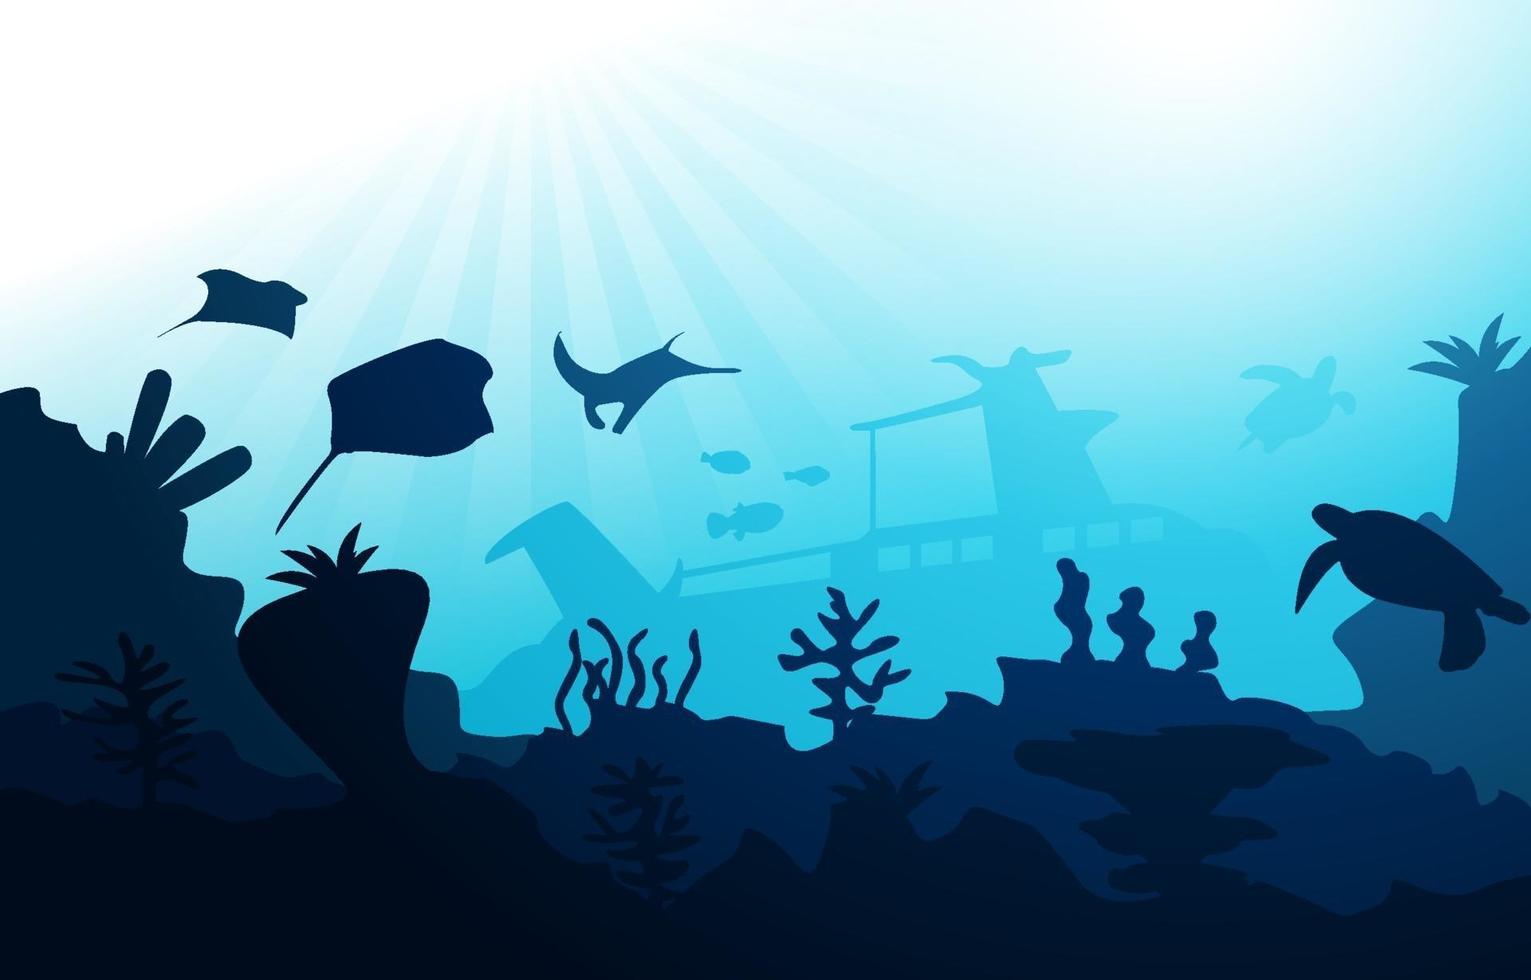 barco hundido vida silvestre animales marinos océano submarino ilustración acuática vector